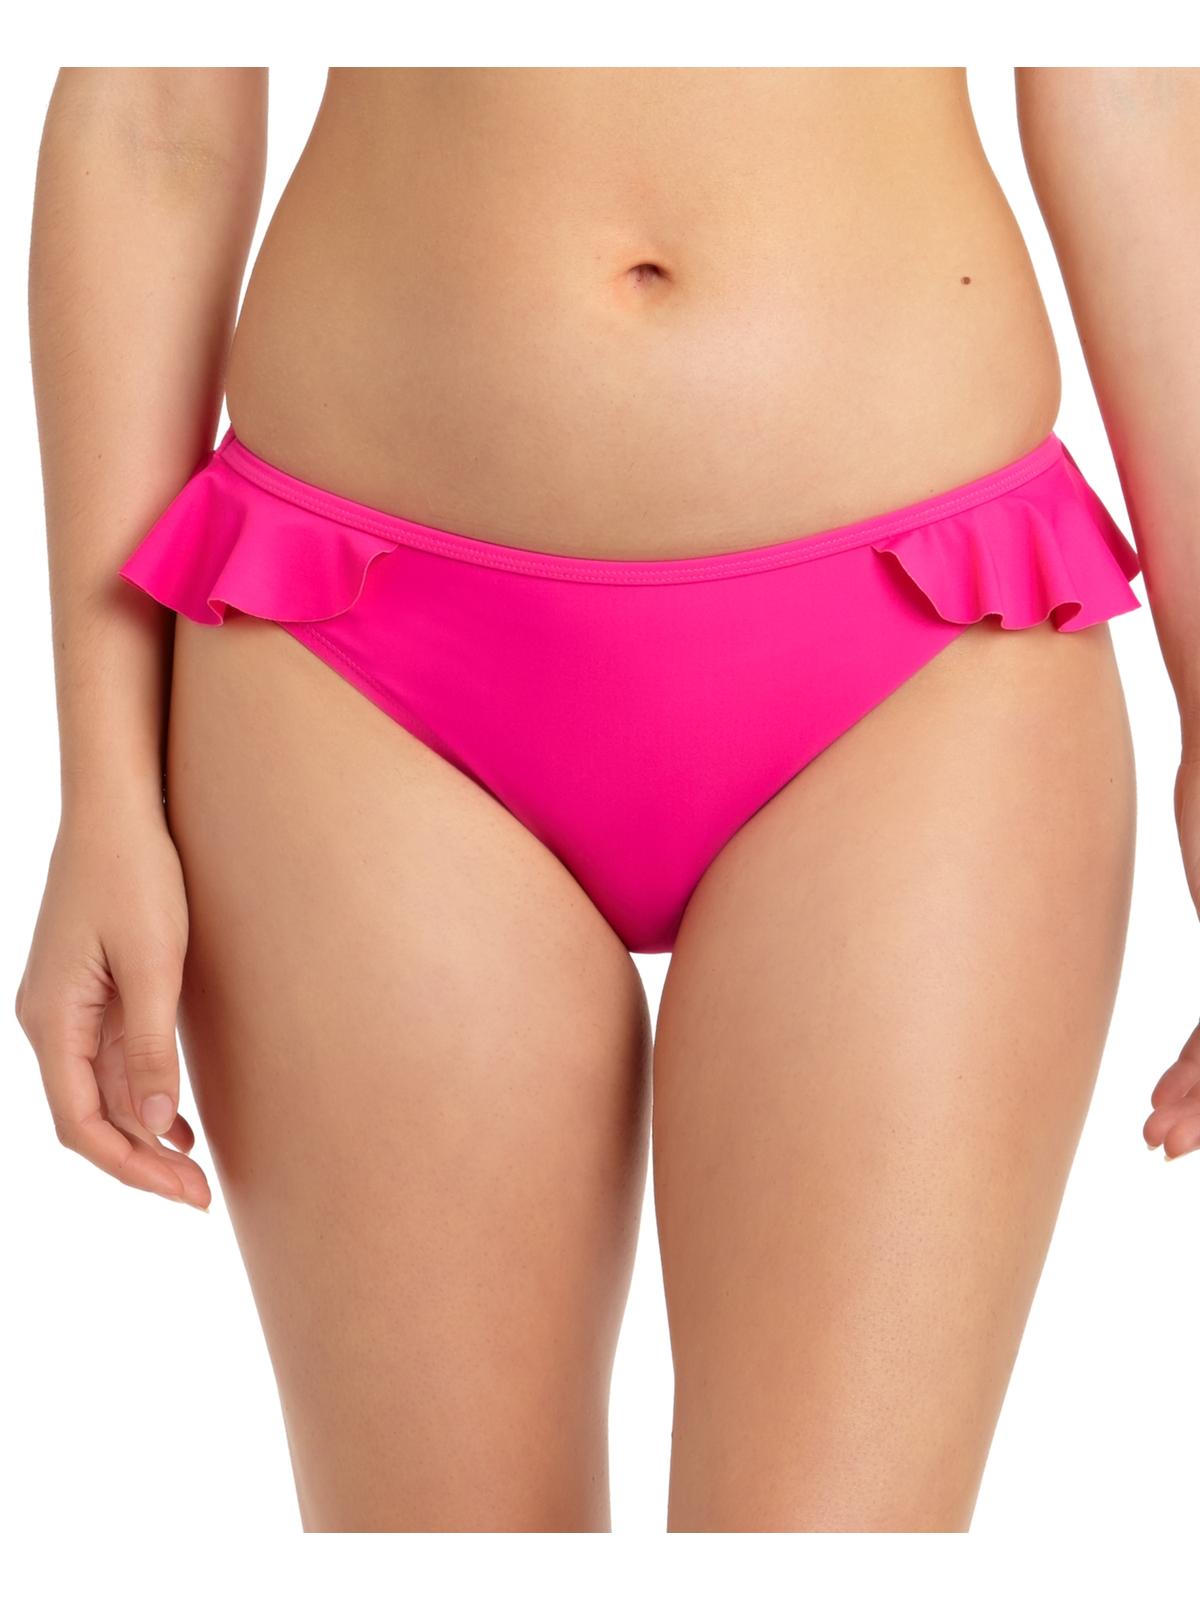 California Waves Womens Ruffled Hipster Swim Bottom Separates Pink XL - image 1 of 3